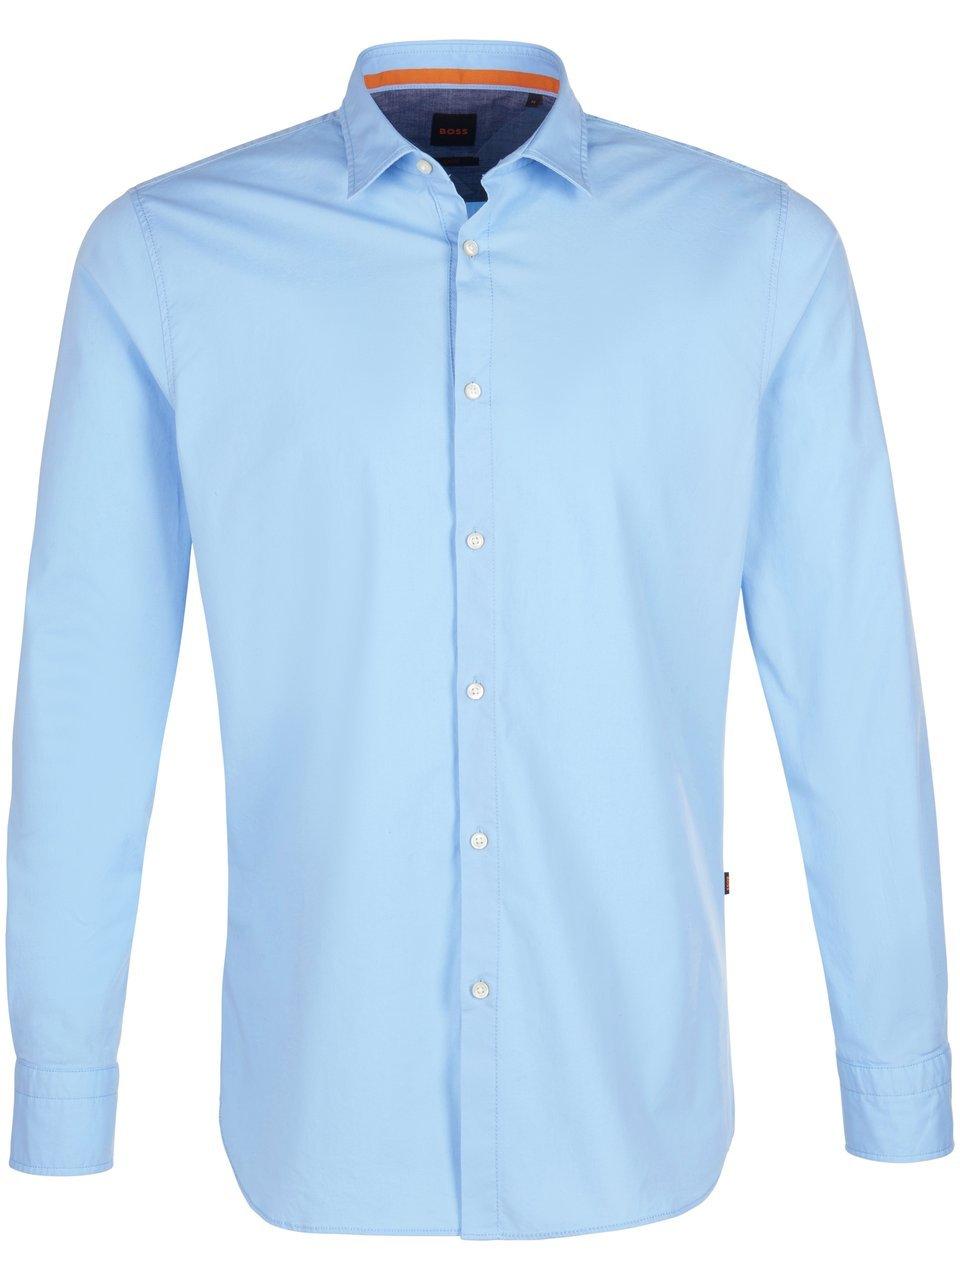 Hugo Boss - Overhemd Lichtblauw - Maat XL - Slim-fit